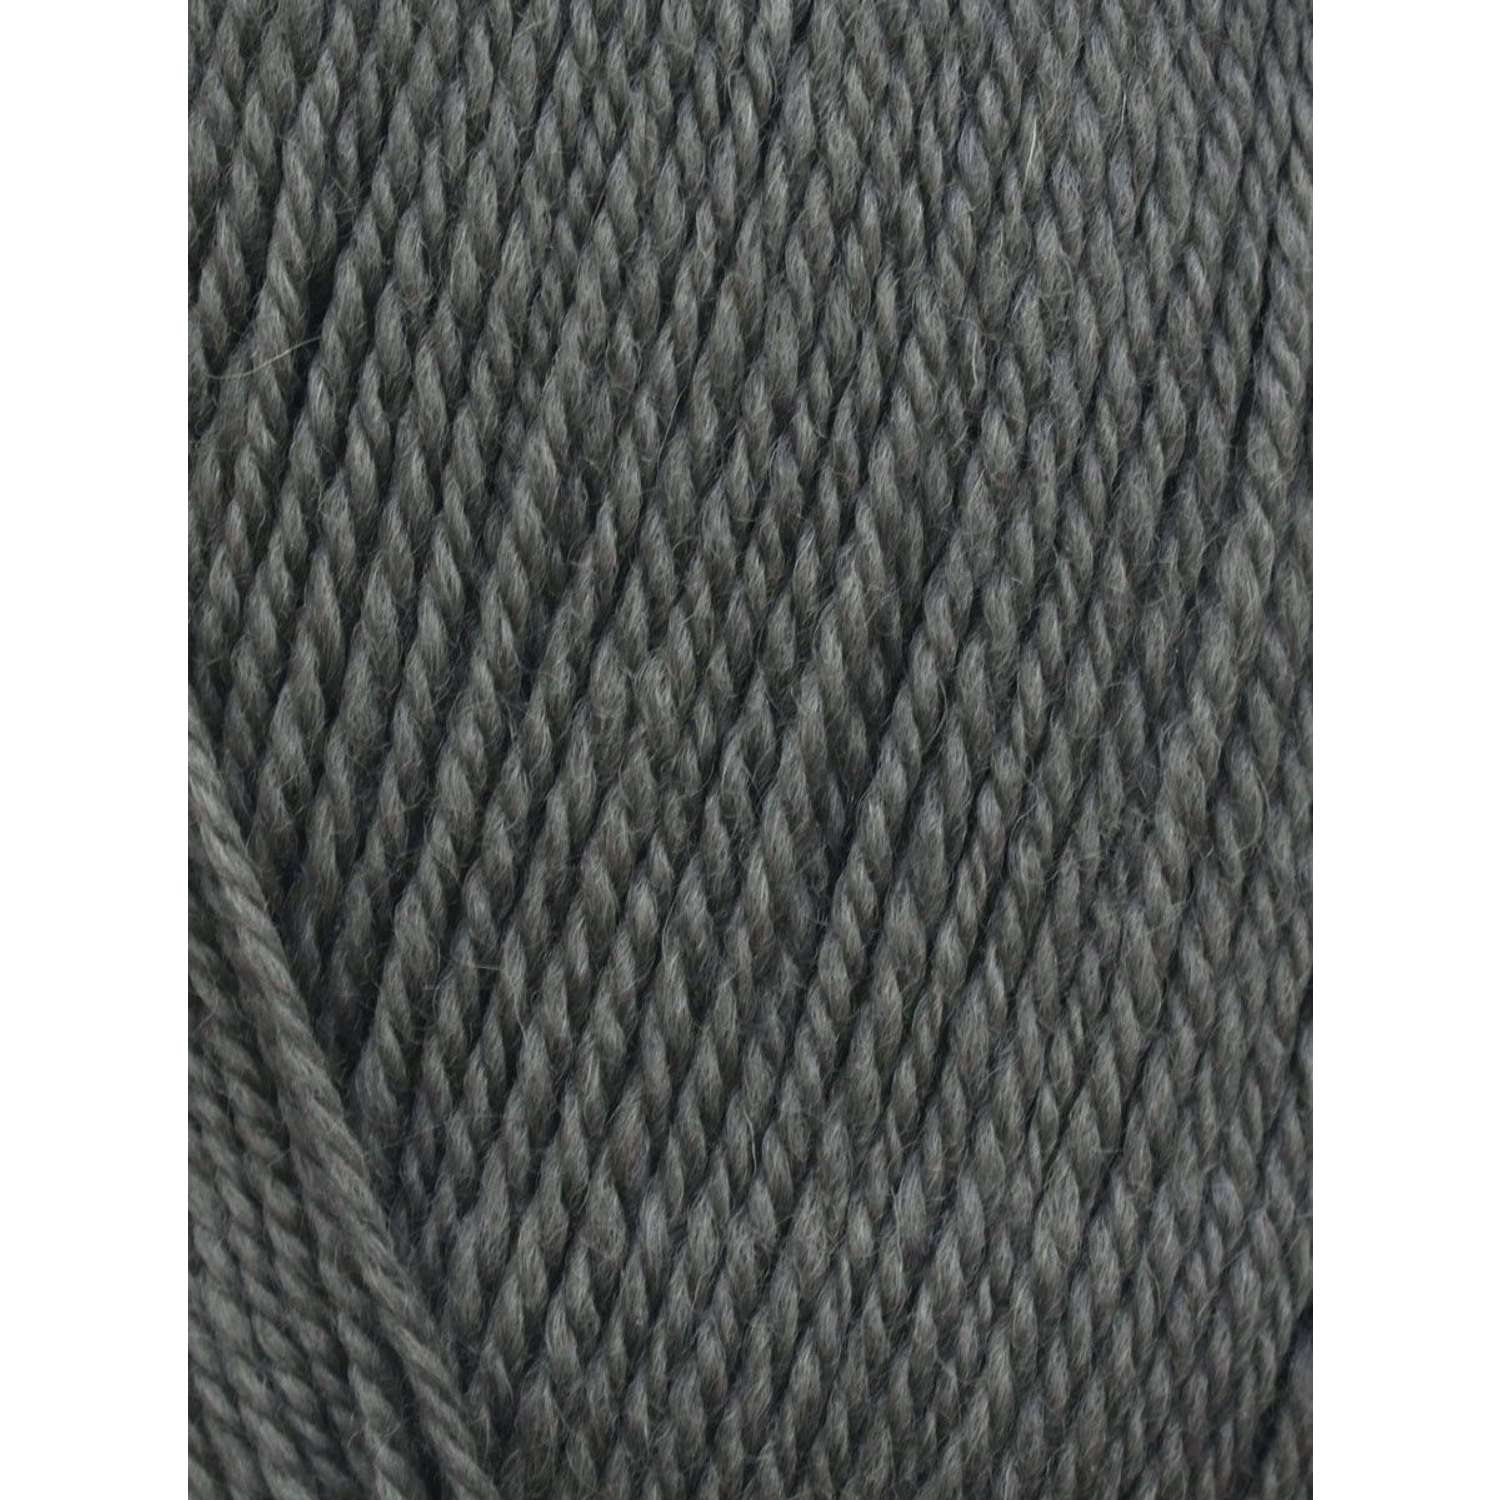 Пряжа Astra Premium Эвридика шерстяная 100 г 200 м 05 темно-серый 3 мотка - фото 3